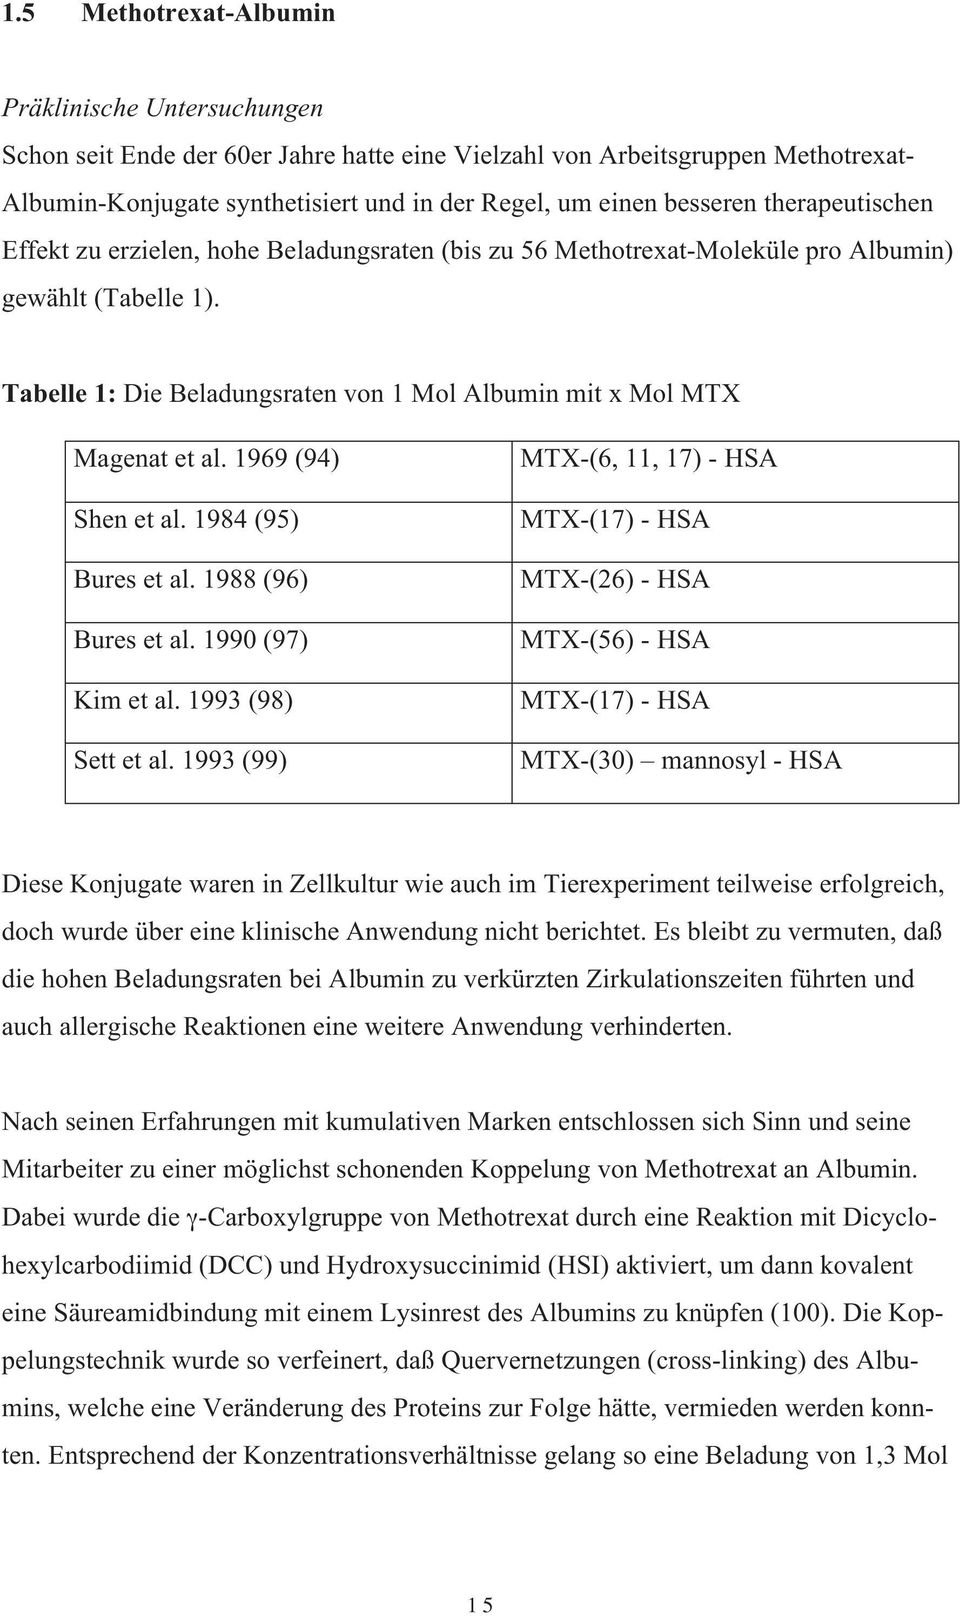 Tabelle 1: Die Beladungsraten von 1 Mol Albumin mit x Mol MTX Magenat et al. 1969 (94) Shen et al. 1984 (95) Bures et al. 1988 (96) Bures et al. 1990 (97) Kim et al. 1993 (98) Sett et al.